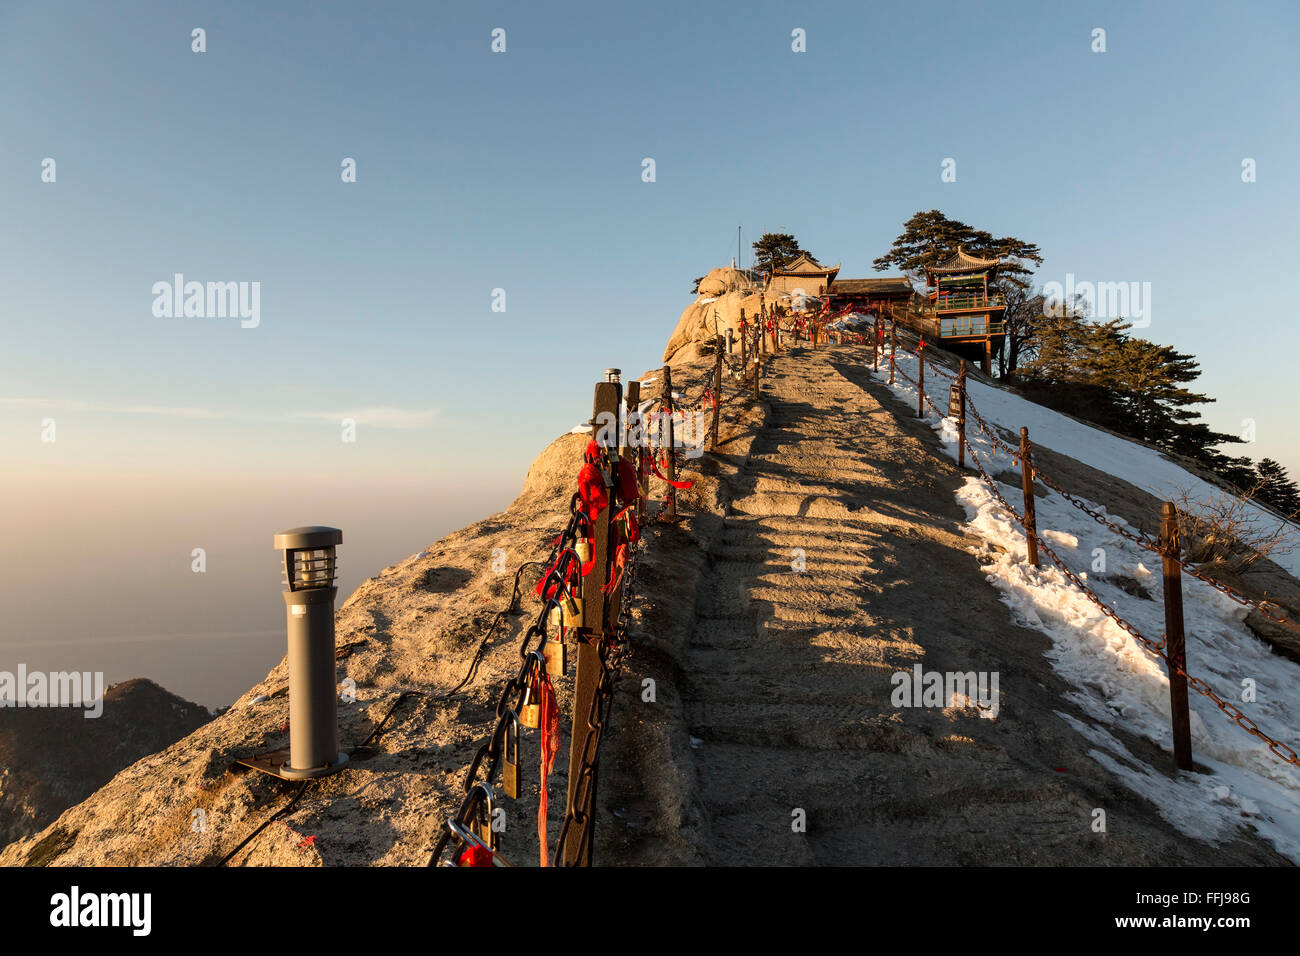 View of the West Peak of Mount Huashan, China Stock Photo